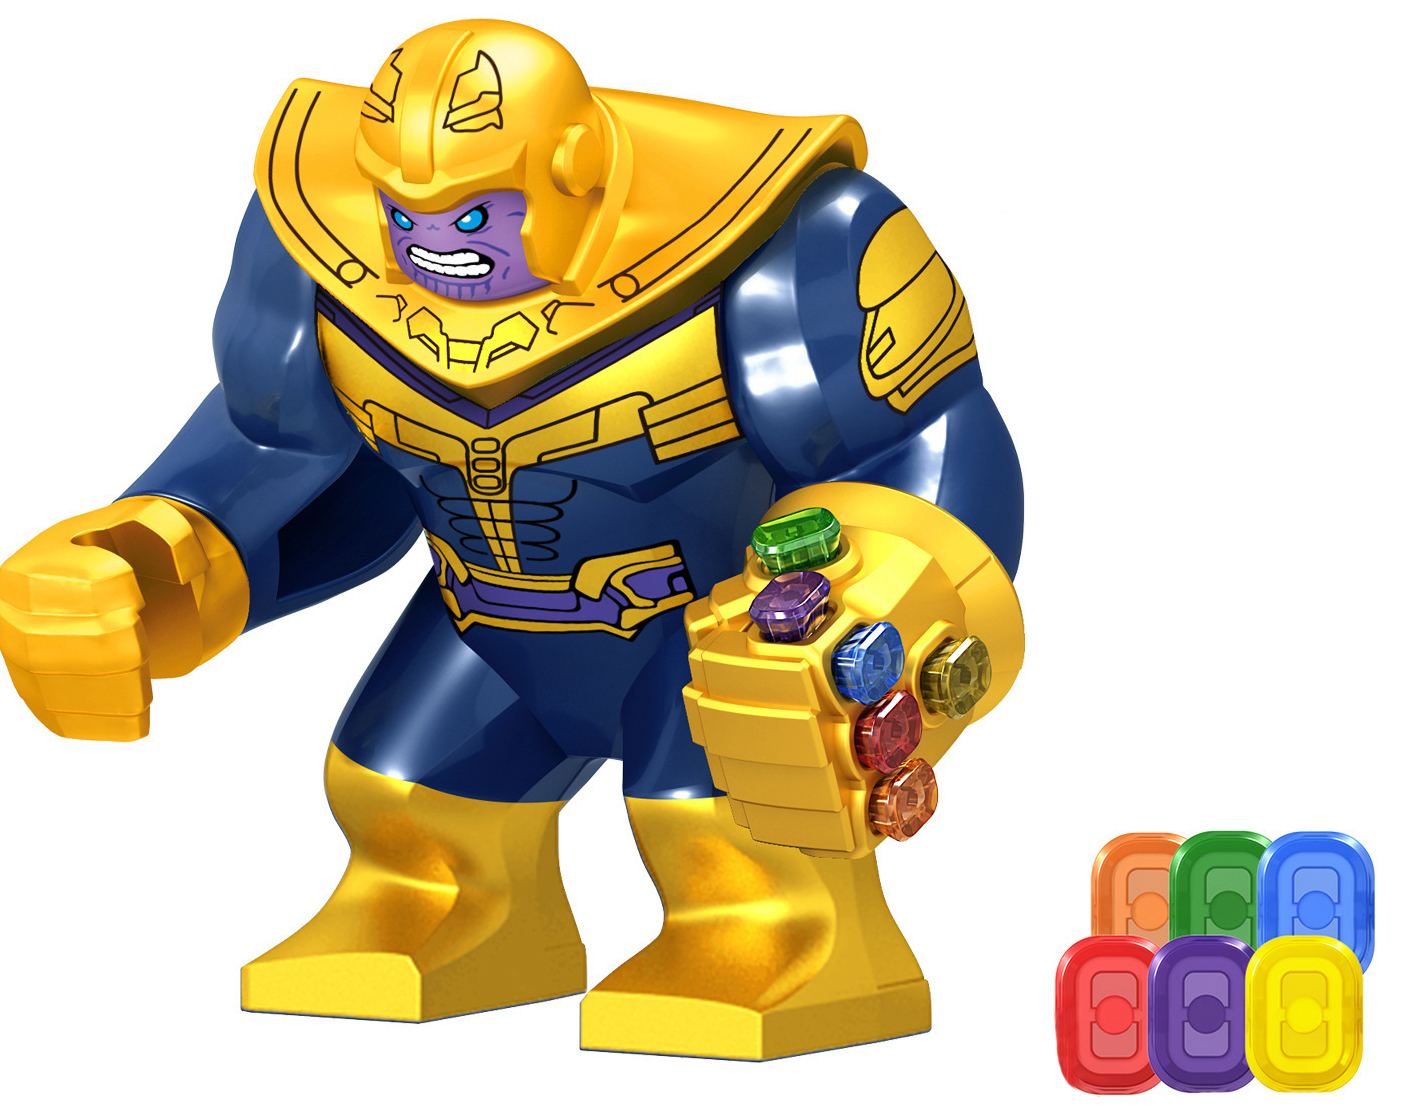 Marvel Avengers Infinity War LARGE Thanos Gauntlet 6 infinity stones Minifigures